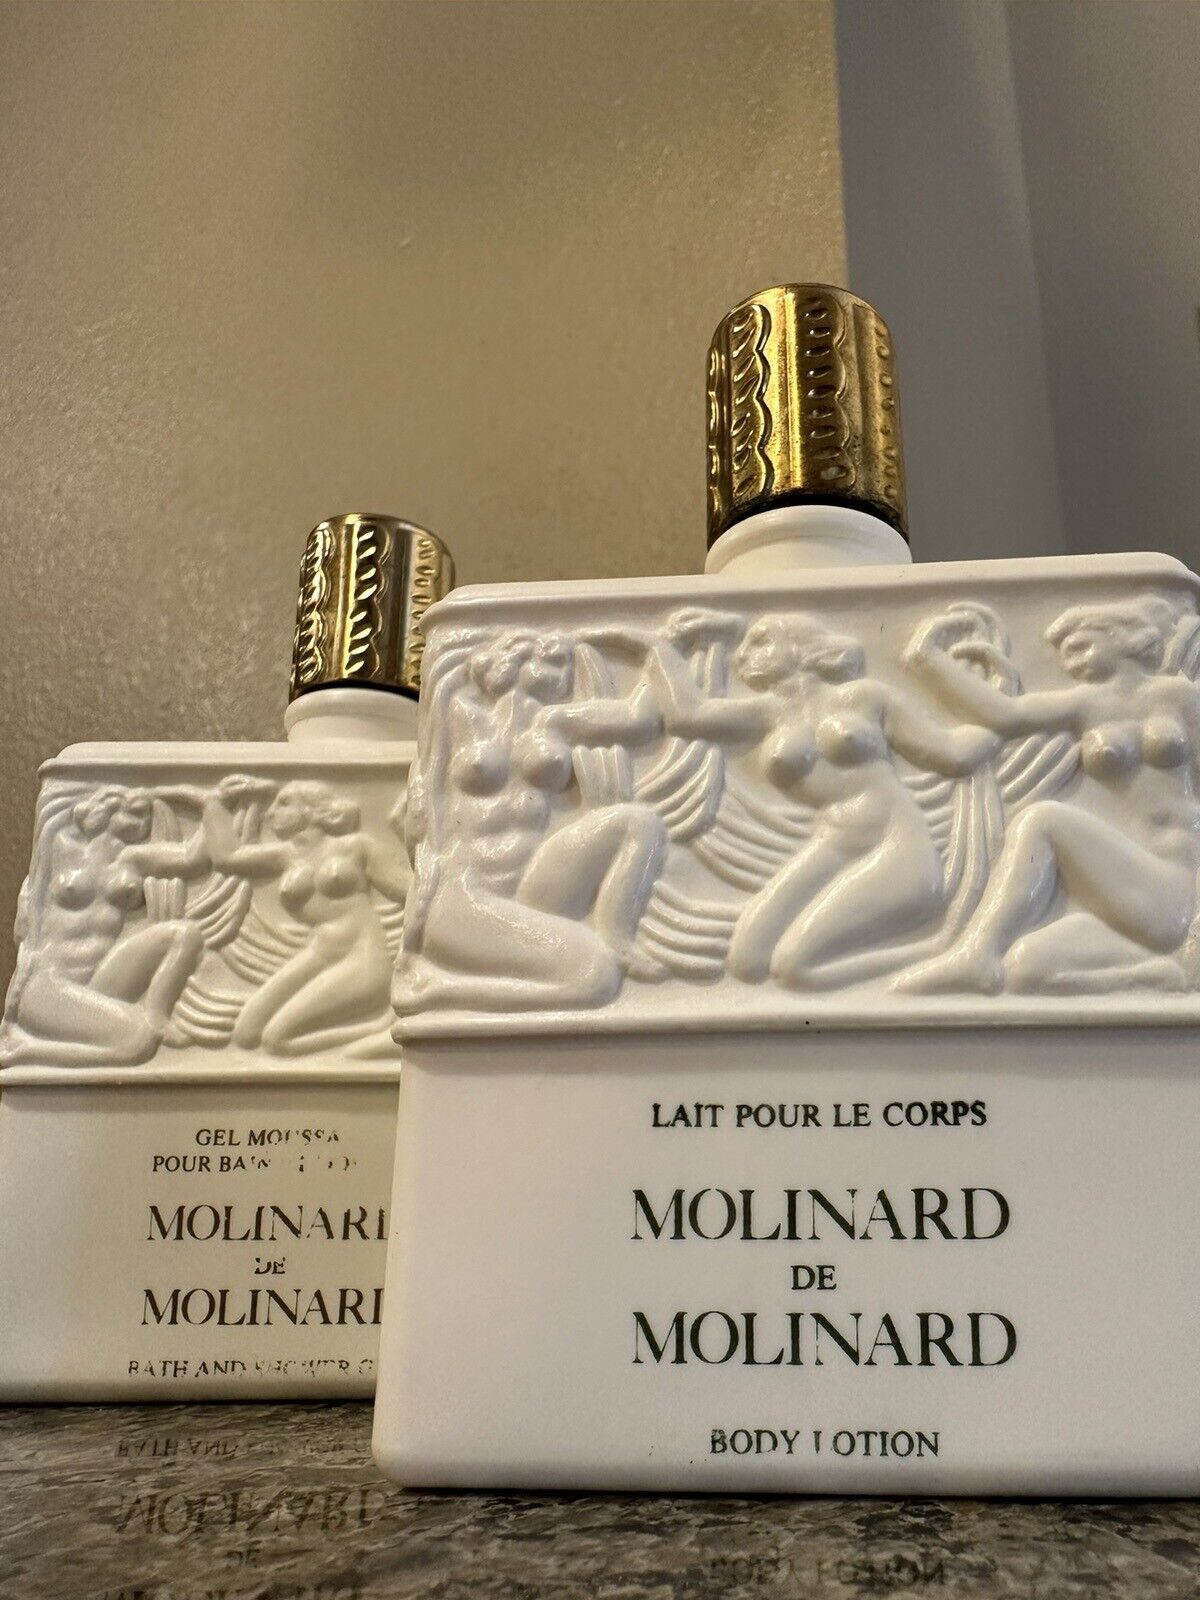 Vintage Molinard De Molinard Paris Body Lotion Bath Shower Gel 200 ml 90% - 100%